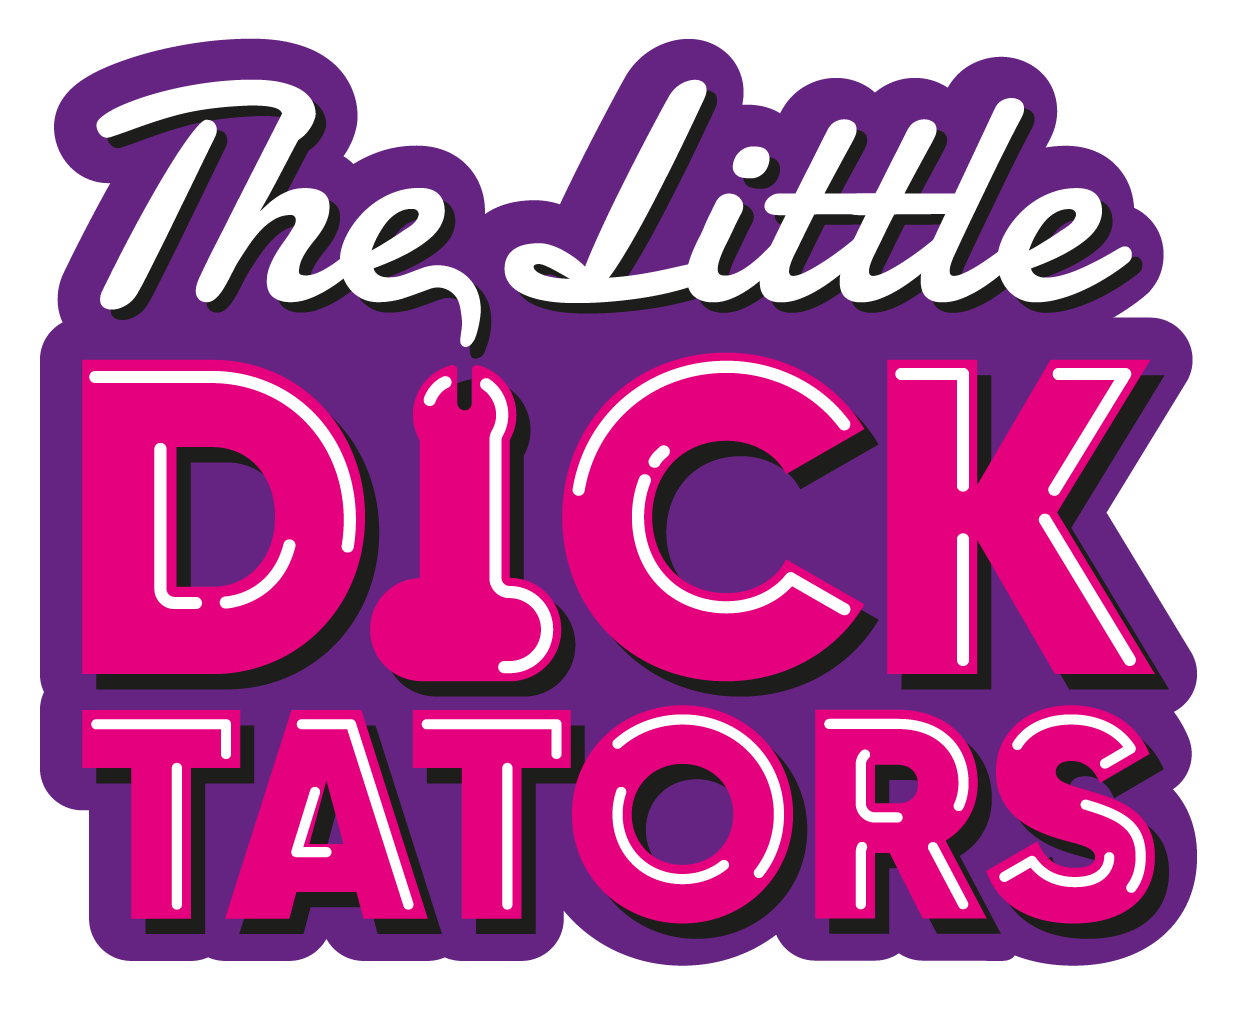 About Littledicktators